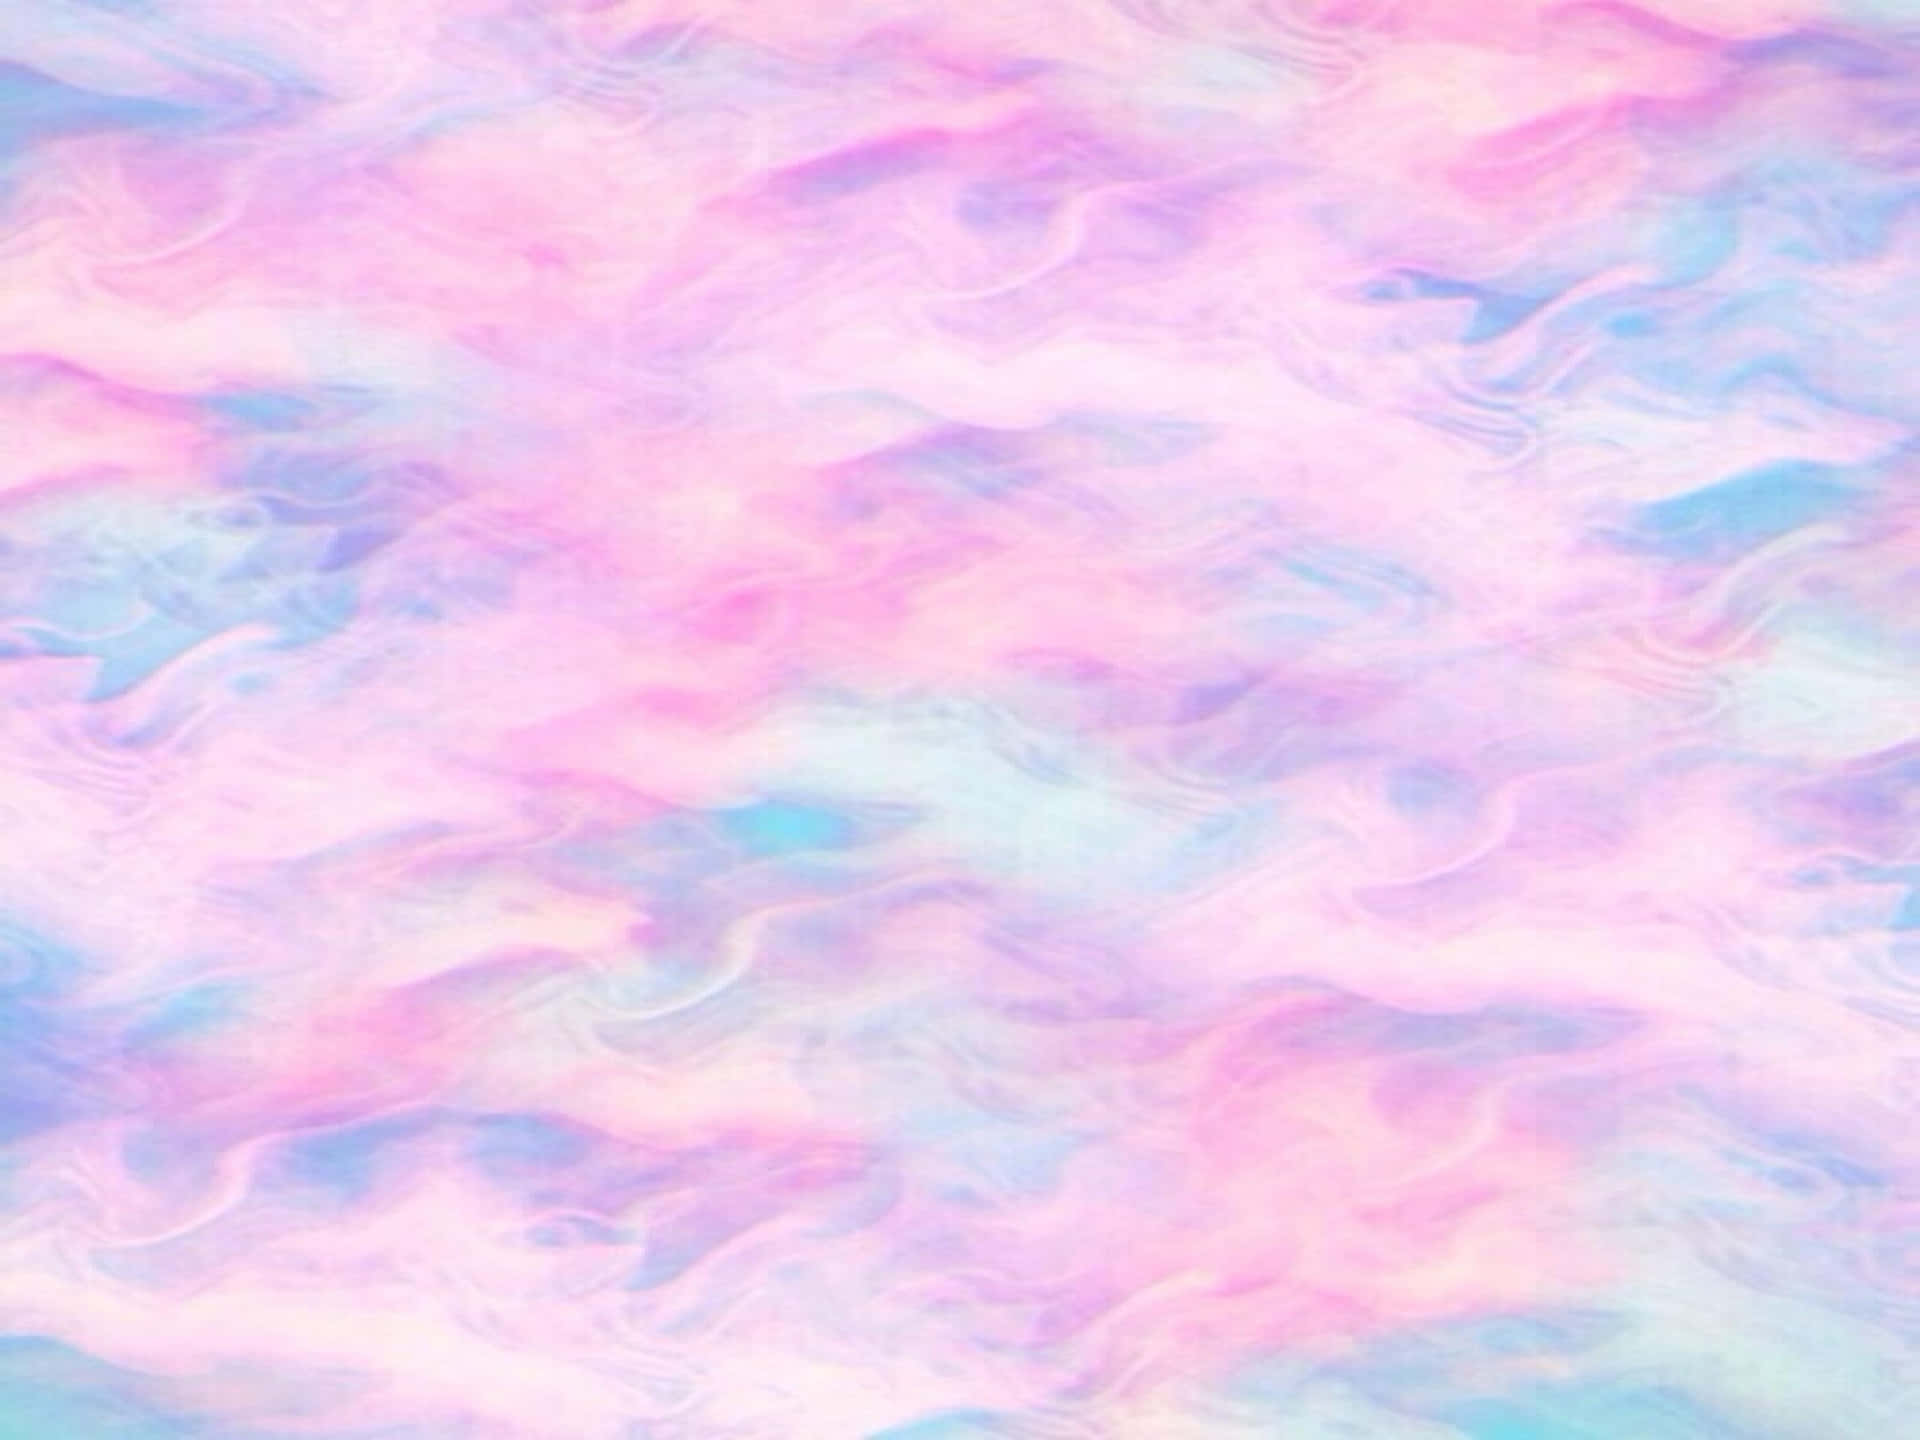 Cotton Candy Wallpaper  Cute patterns wallpaper Abstract wallpaper  backgrounds Iphone wallpaper vsco